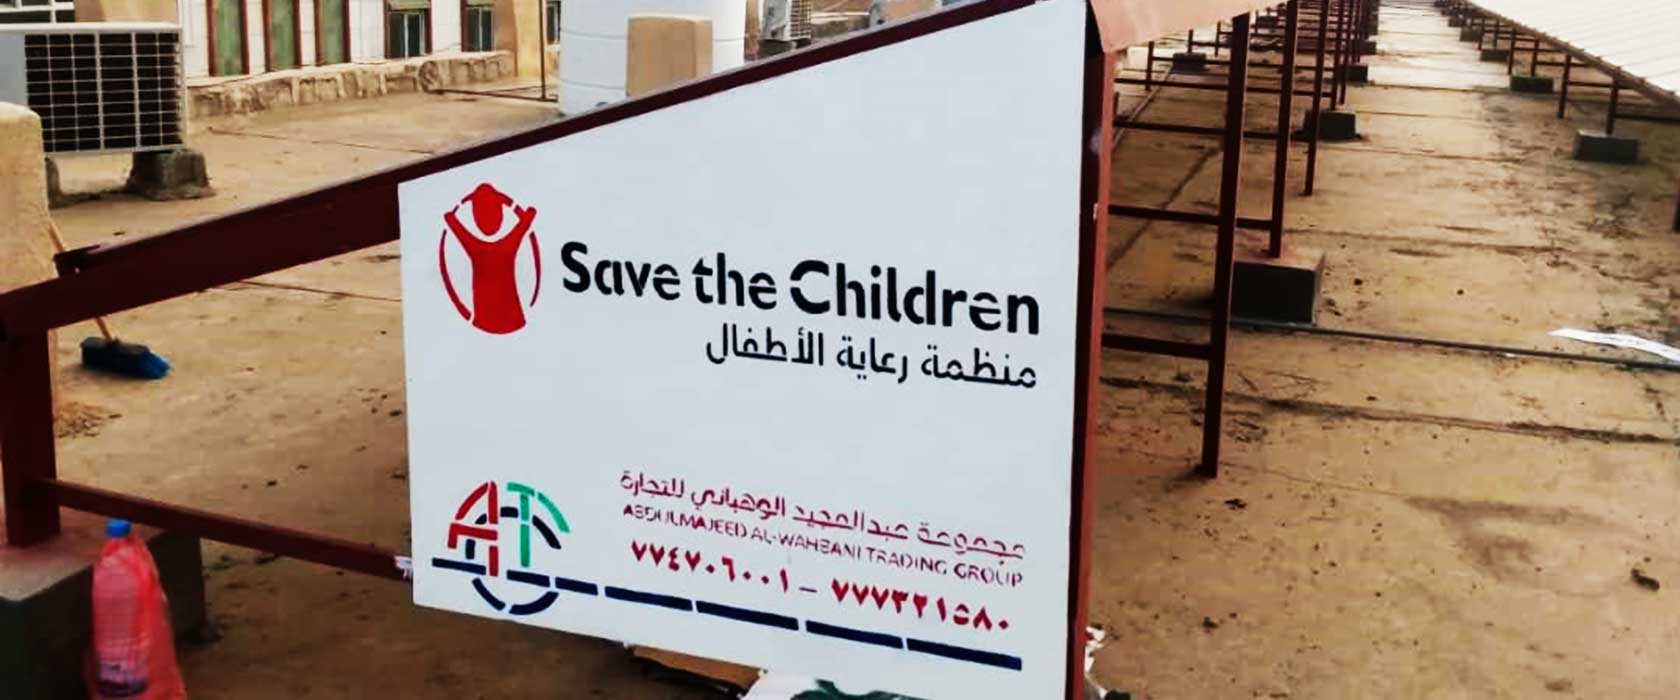 Solar Panels for Save Children Org. Project - AL-Gmuhoury Hospital - Haja